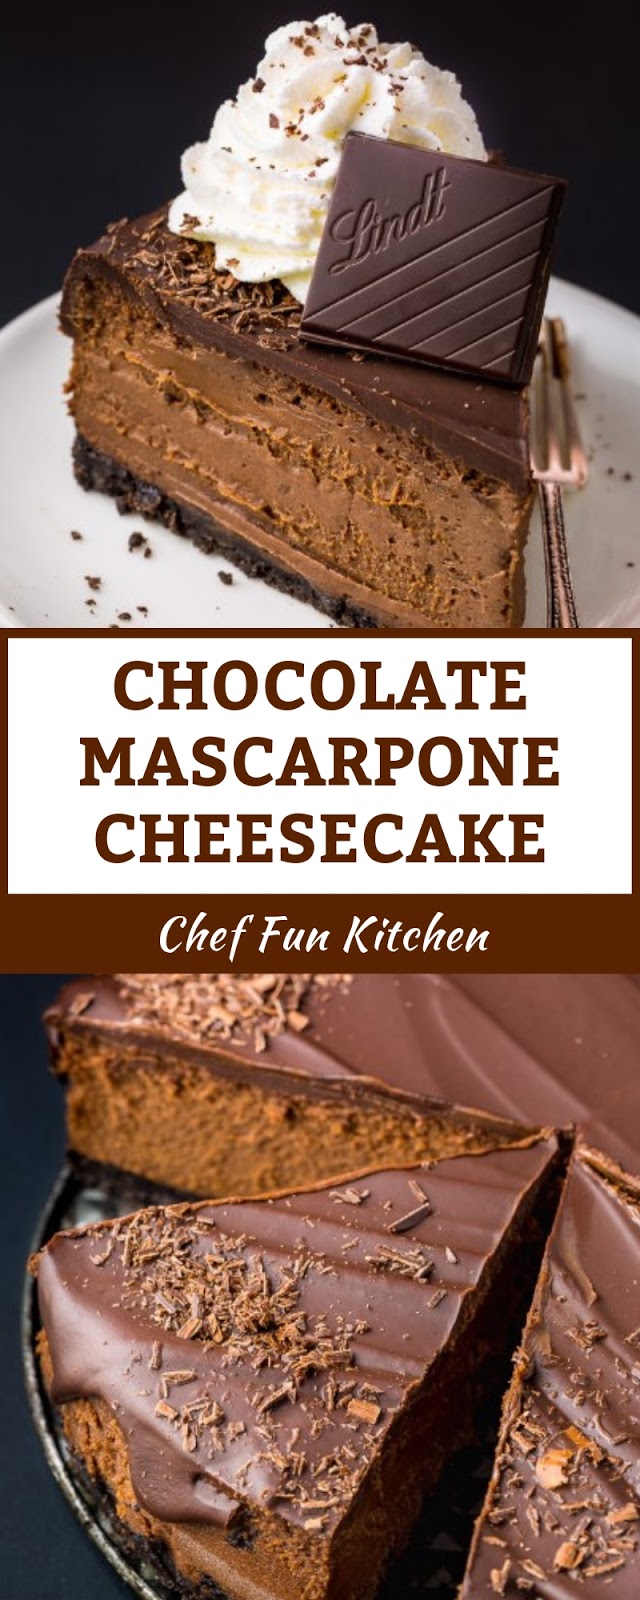 CHOCOLATE MASCARPONE CHEESECAKE